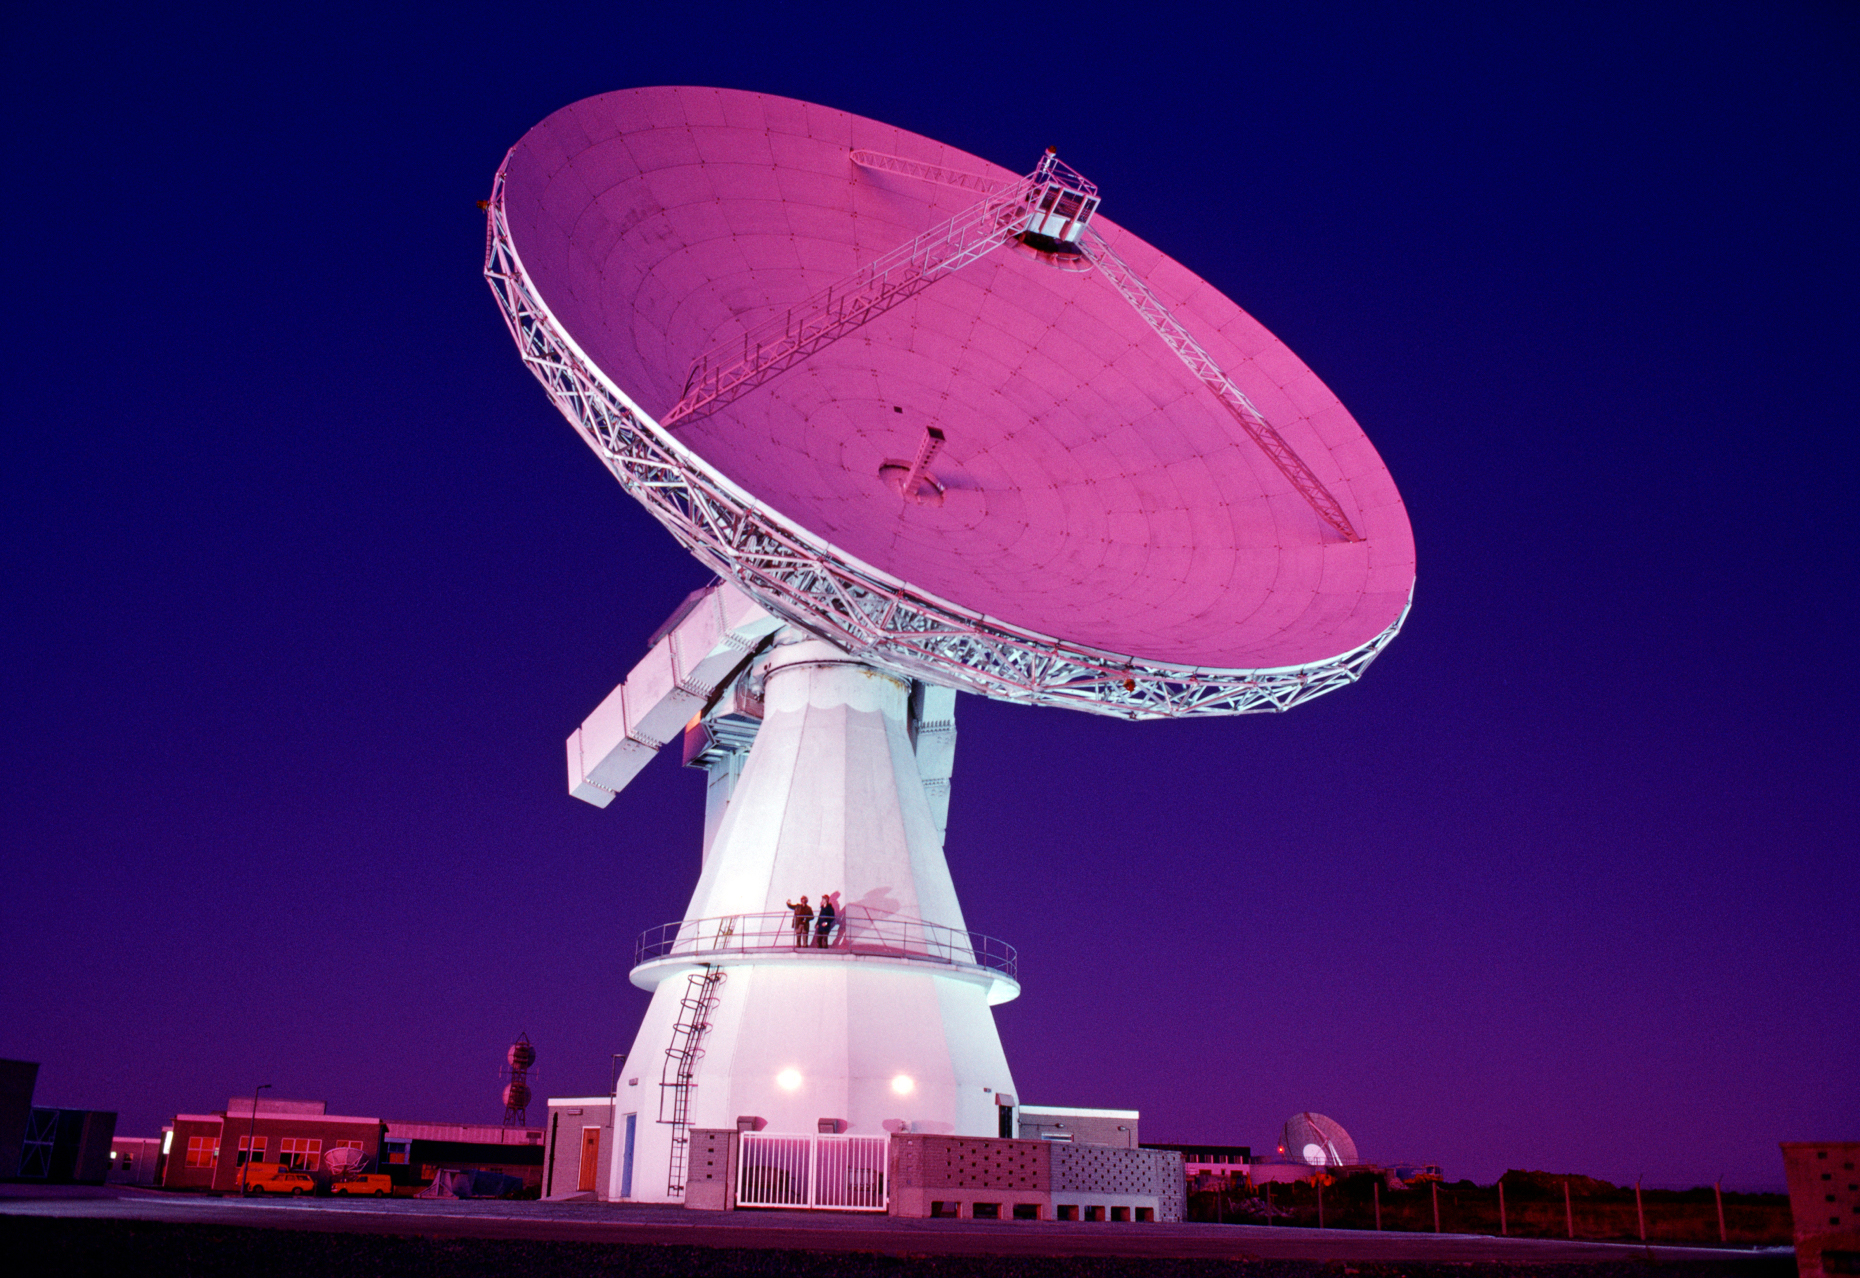 Night view of technicians standing on platform of telecommunications (satellite) dish, Cornwall, England